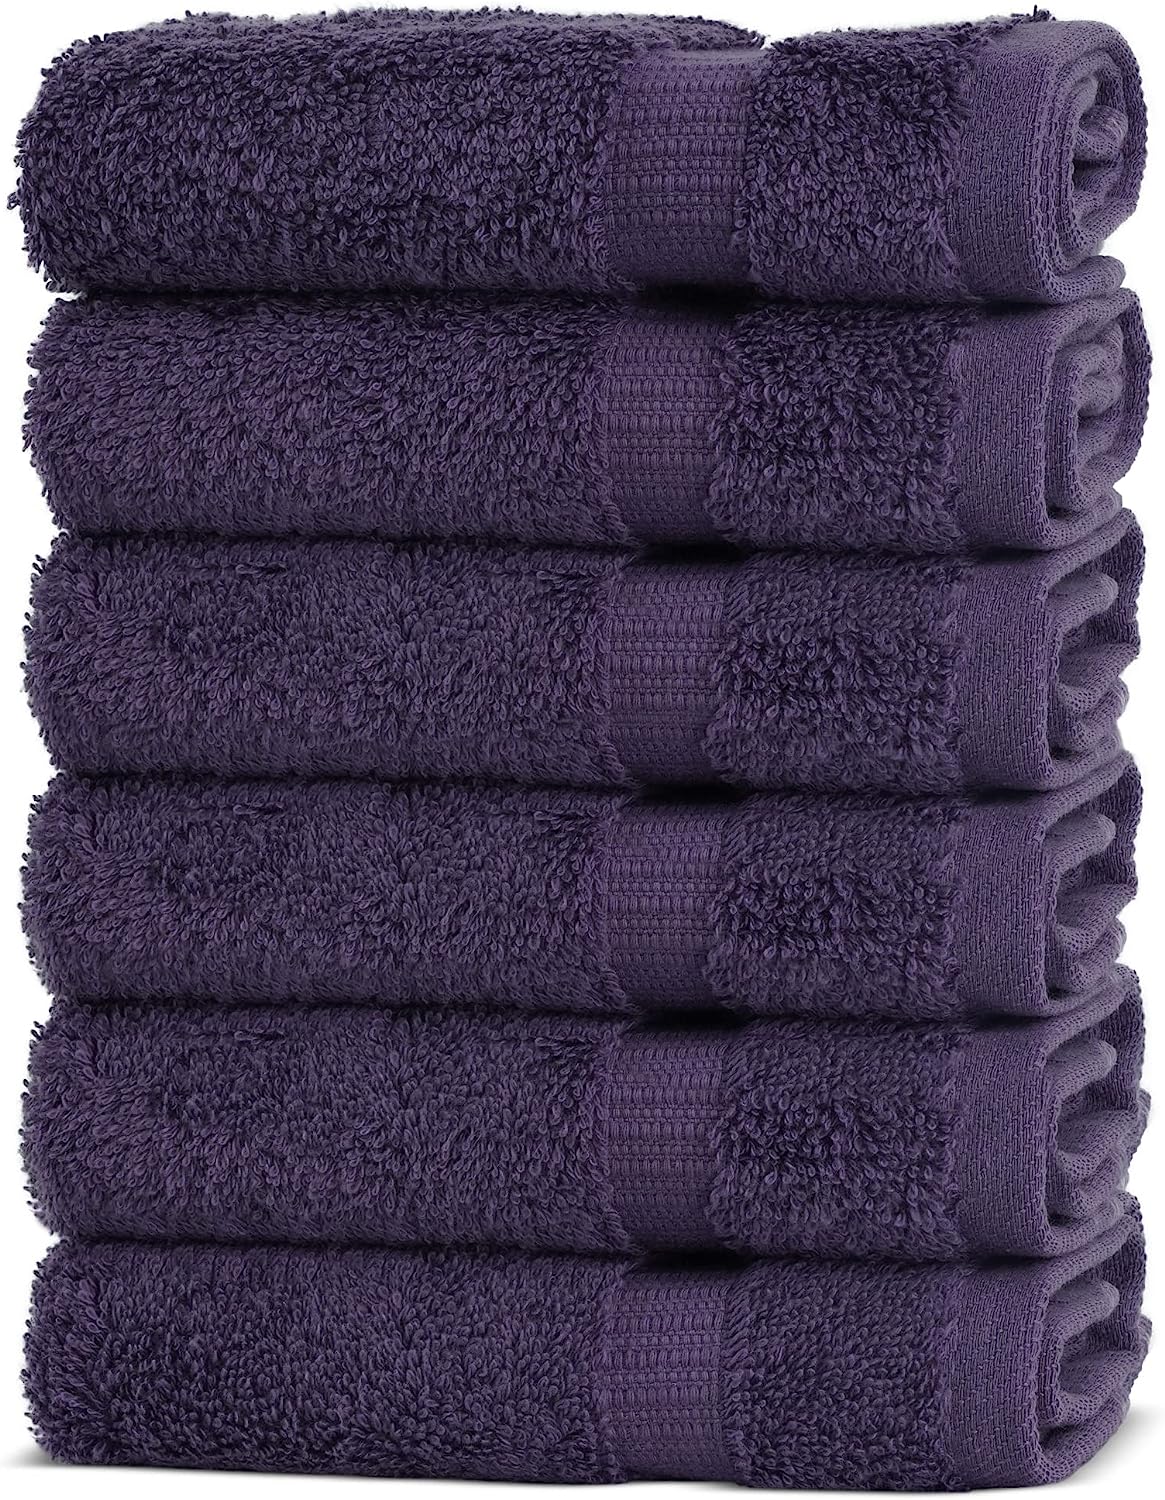 Chakir Turkish Linens 100% Cotton Premium Turkish Towels for Bathroom 27 x 54 (4-Piece Bath Towels - Plum)